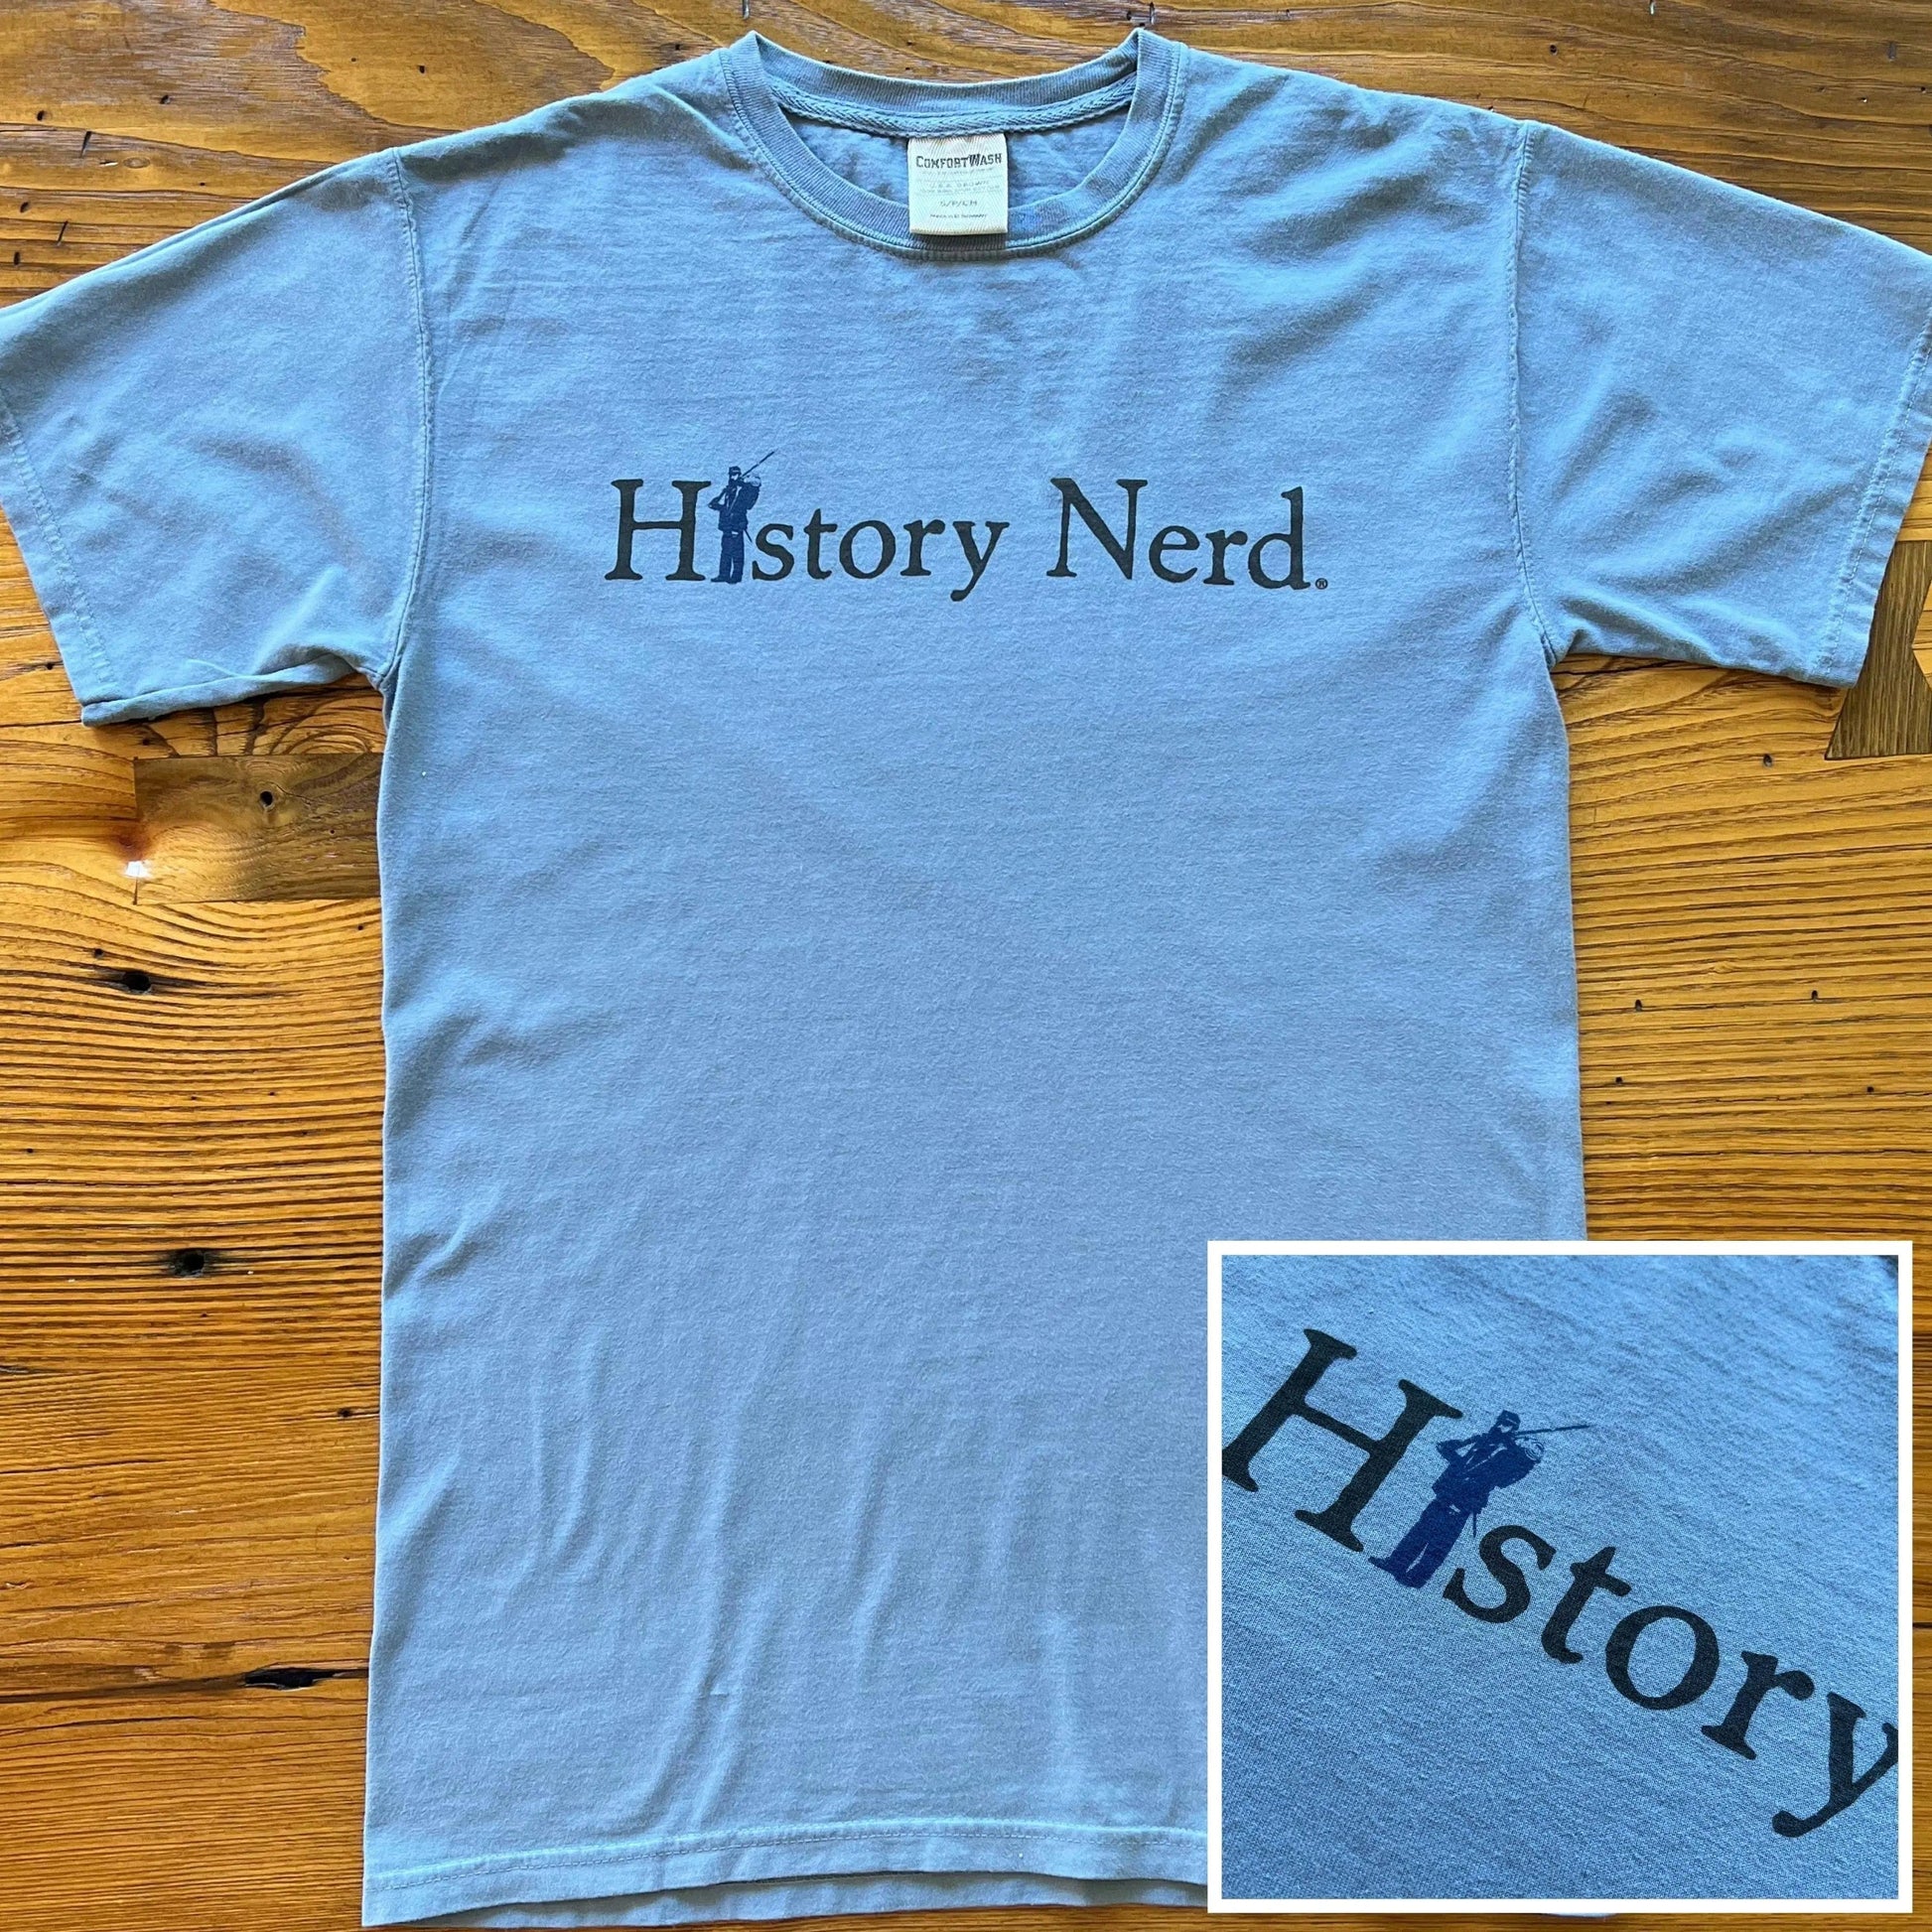 Civil War "History Nerd" Shirt from The History List store